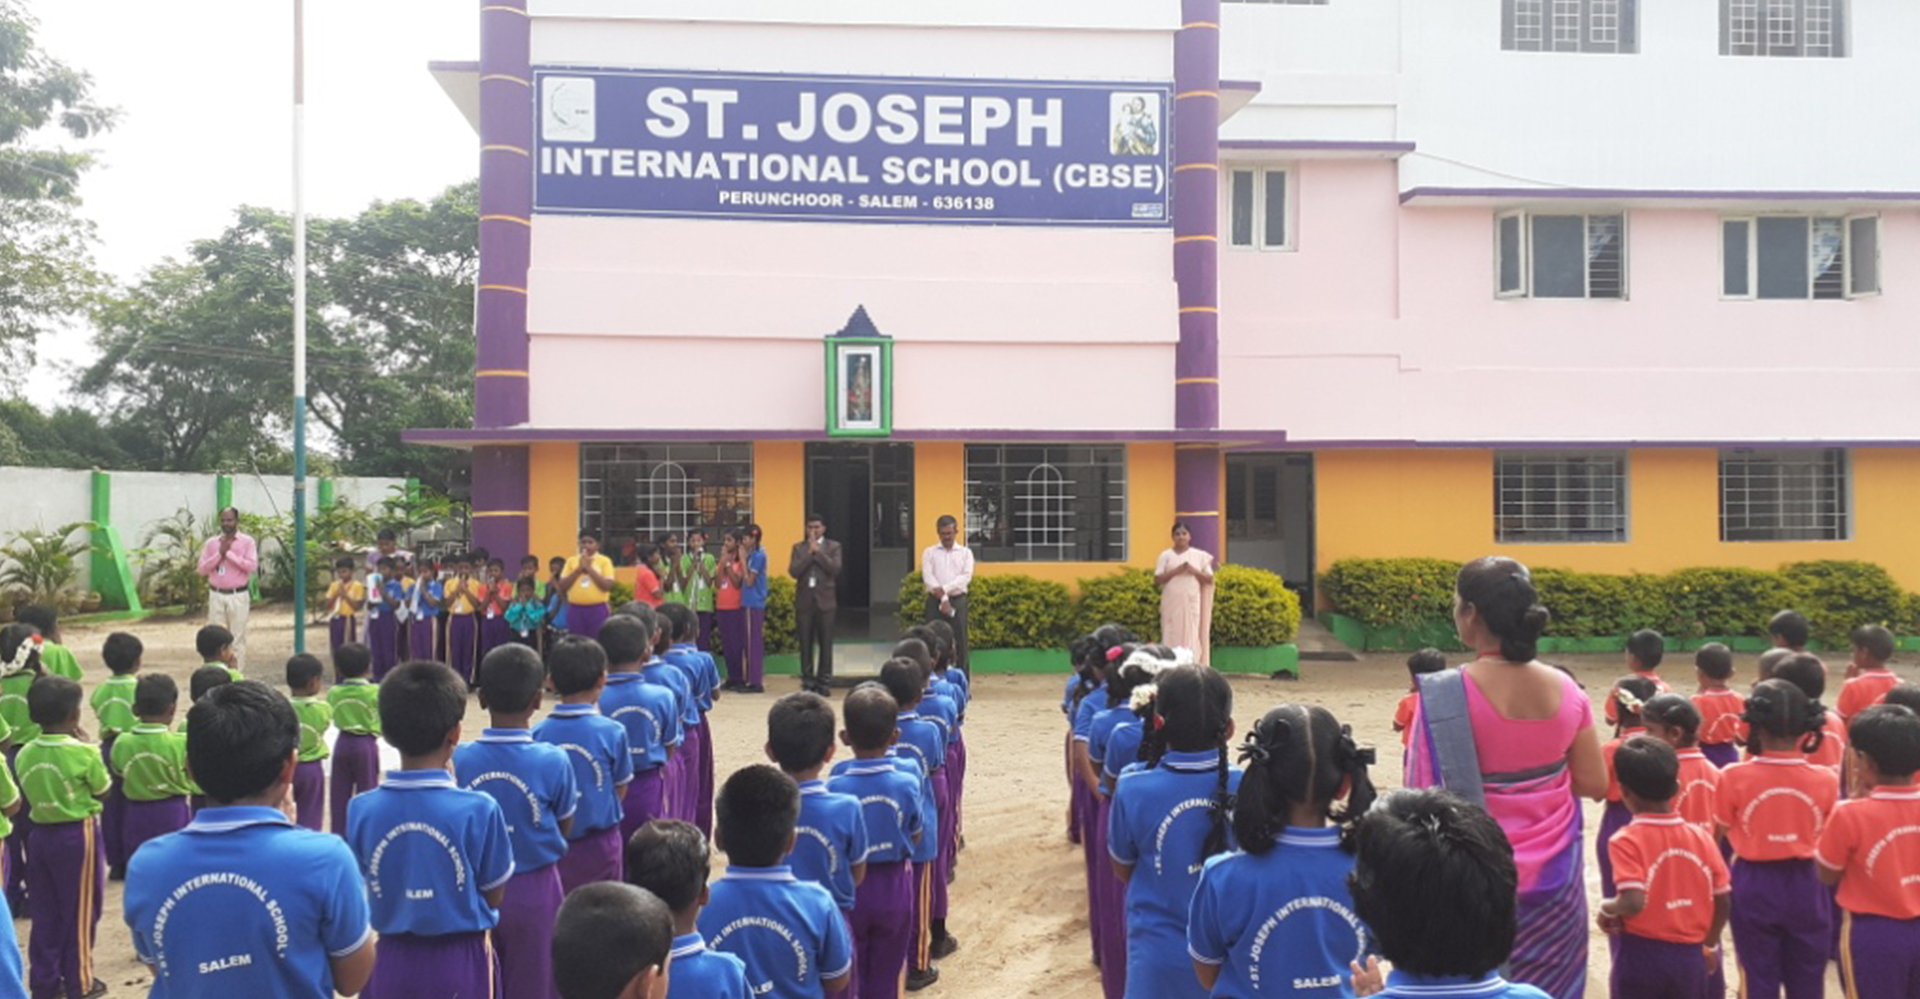 to St.Joseph International School